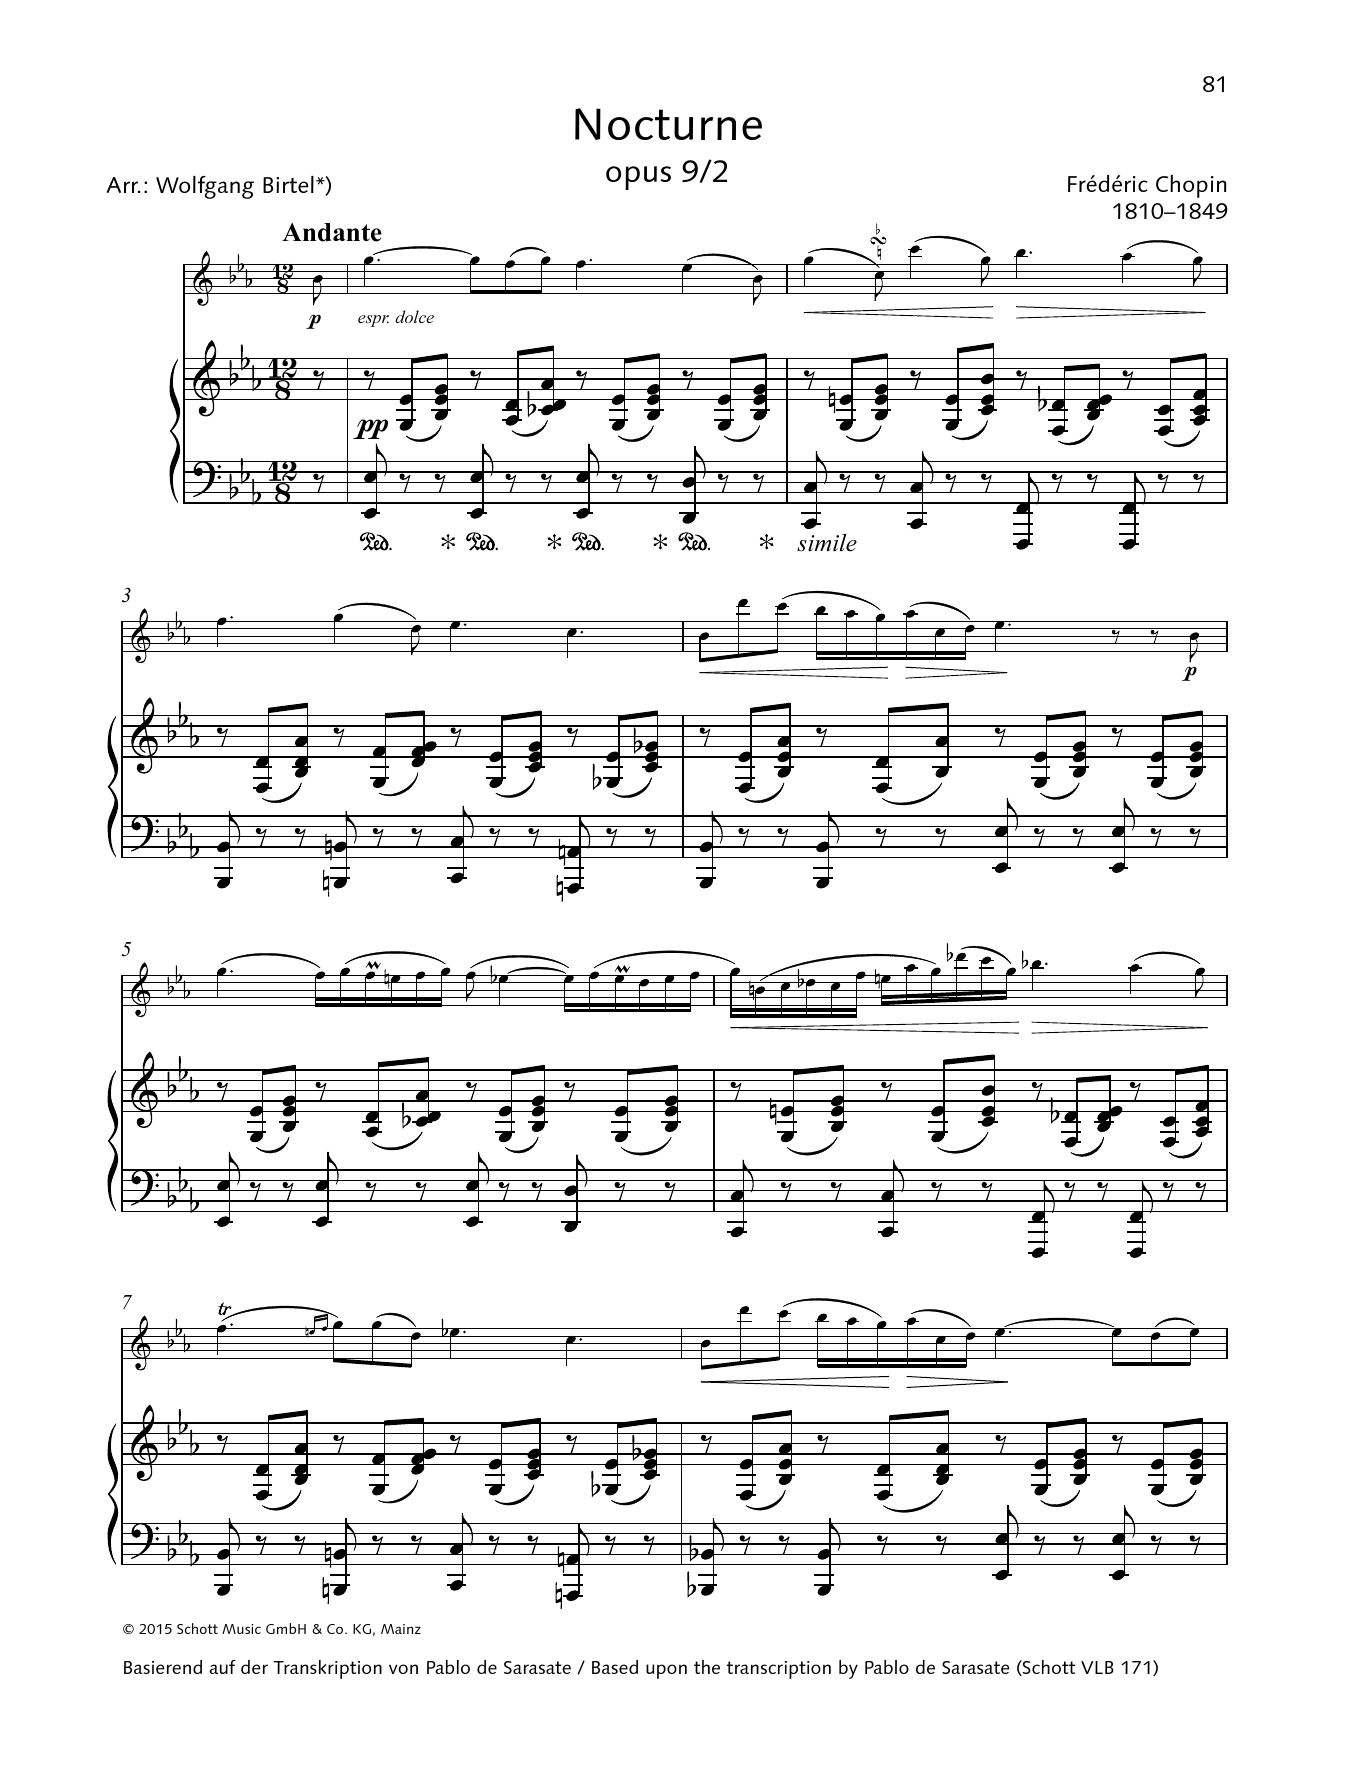 Nocturne E-flat major sheet music